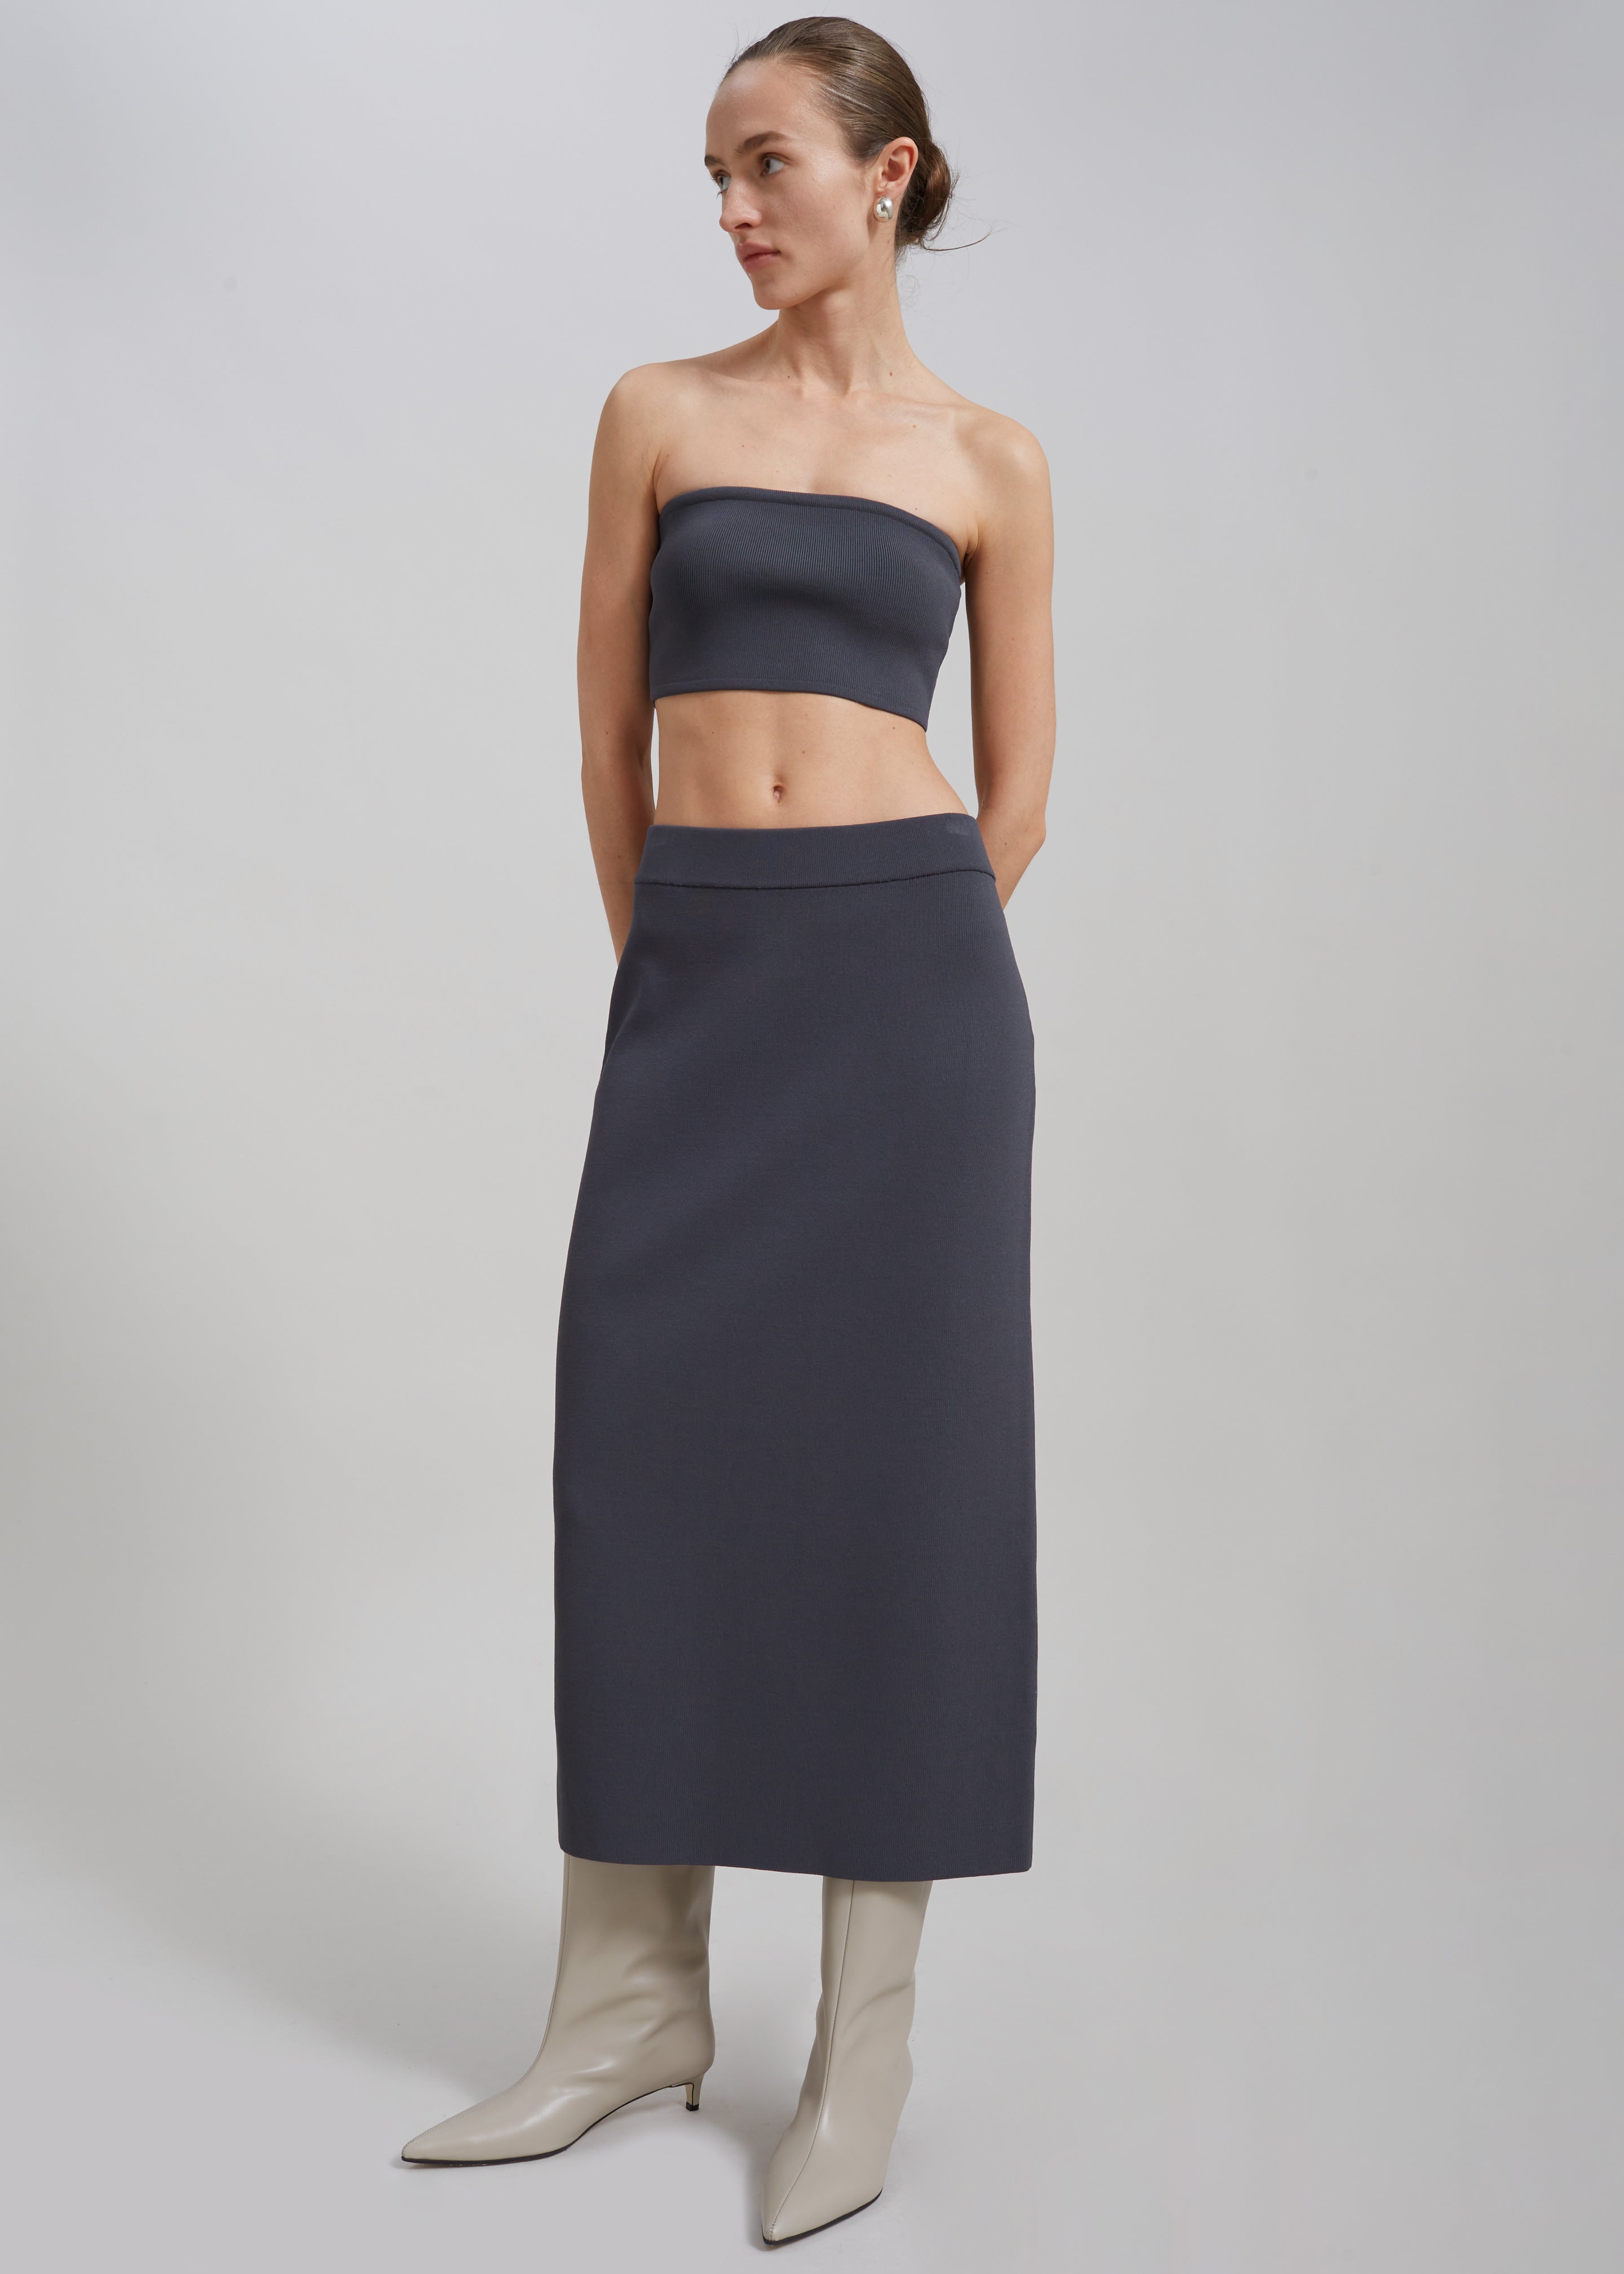 Solange Knit Pencil Skirt - Grey - 10